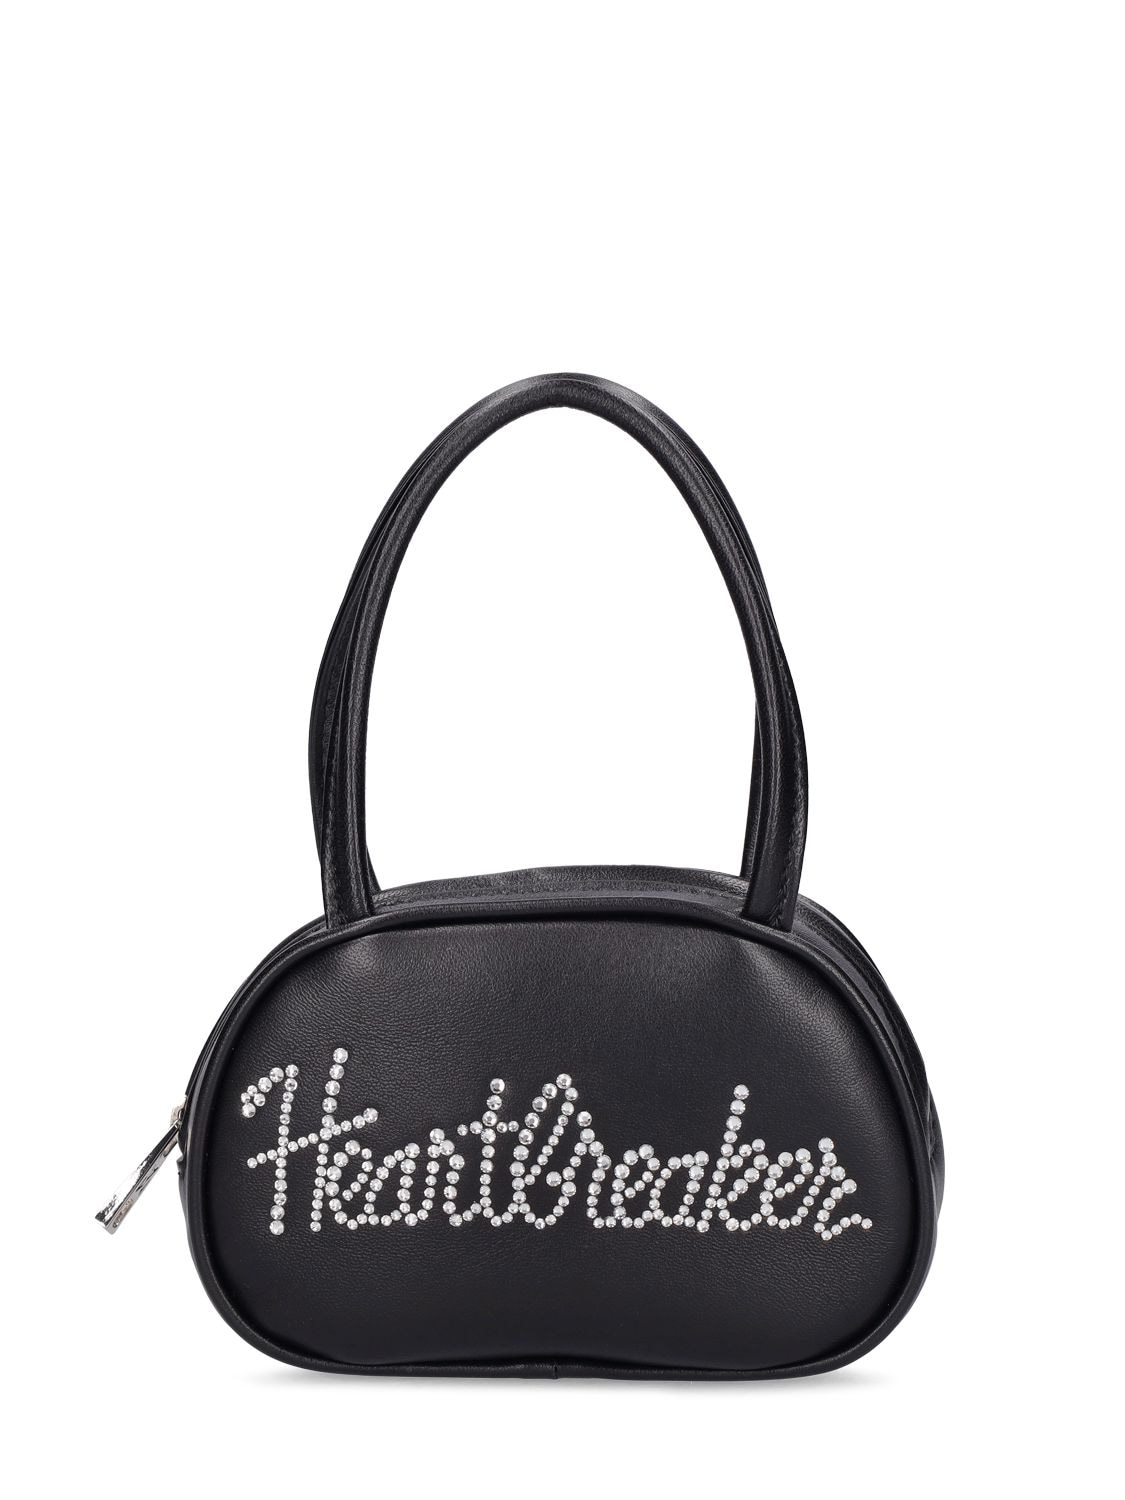 Superamini Heartbreaker Leather Bag